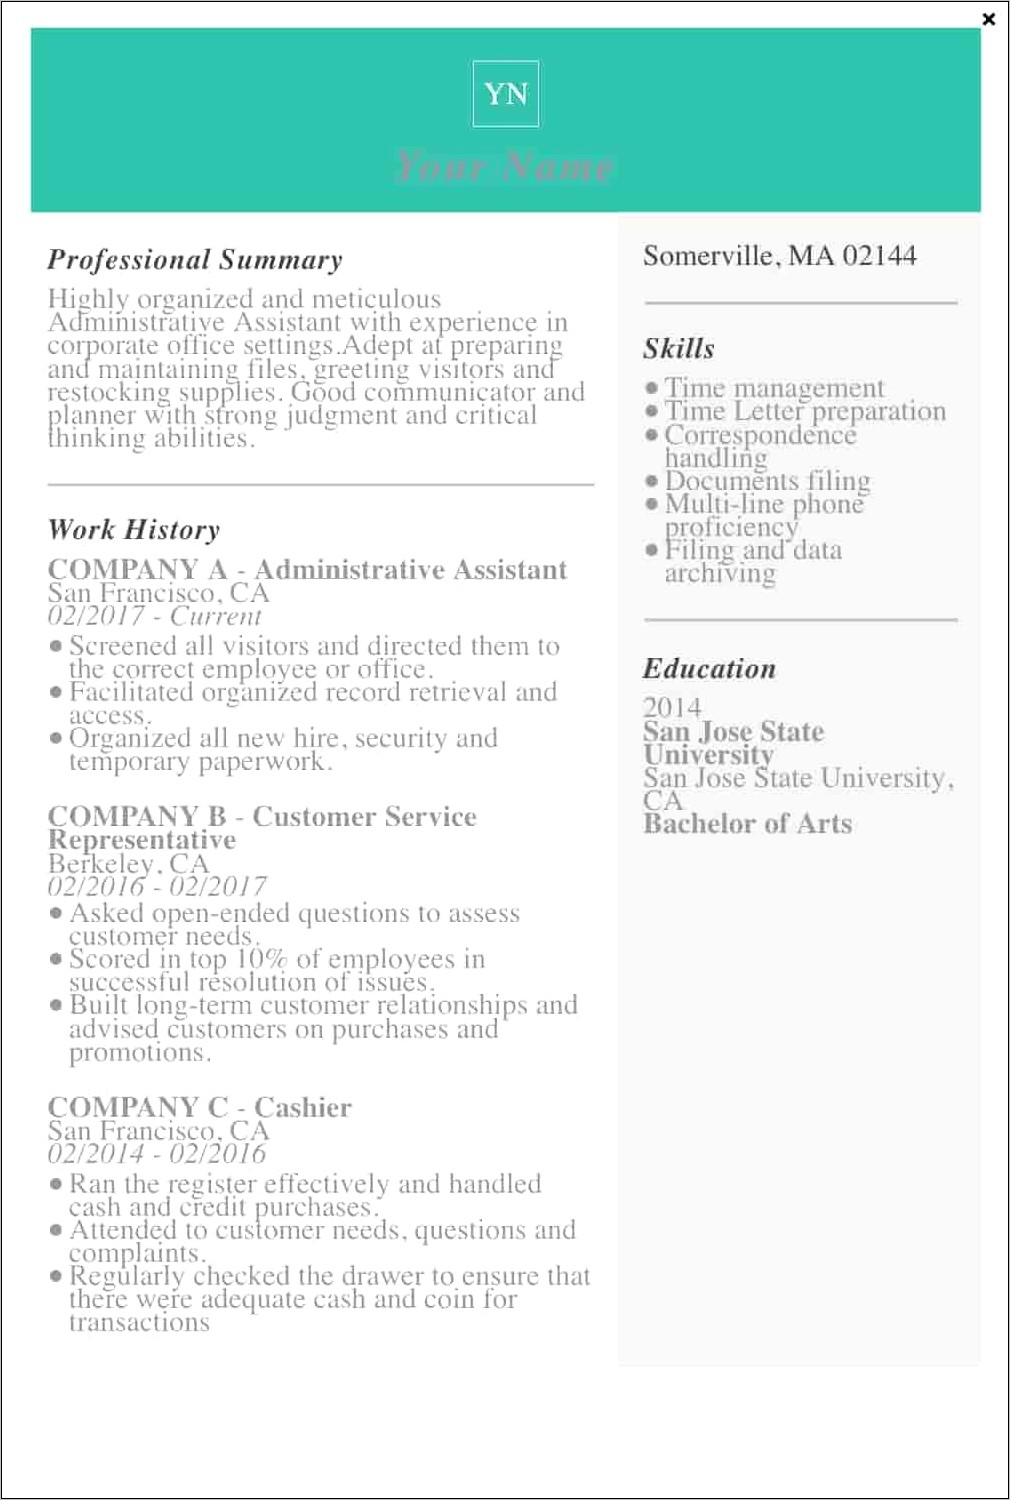 Resume Design Jobs In California